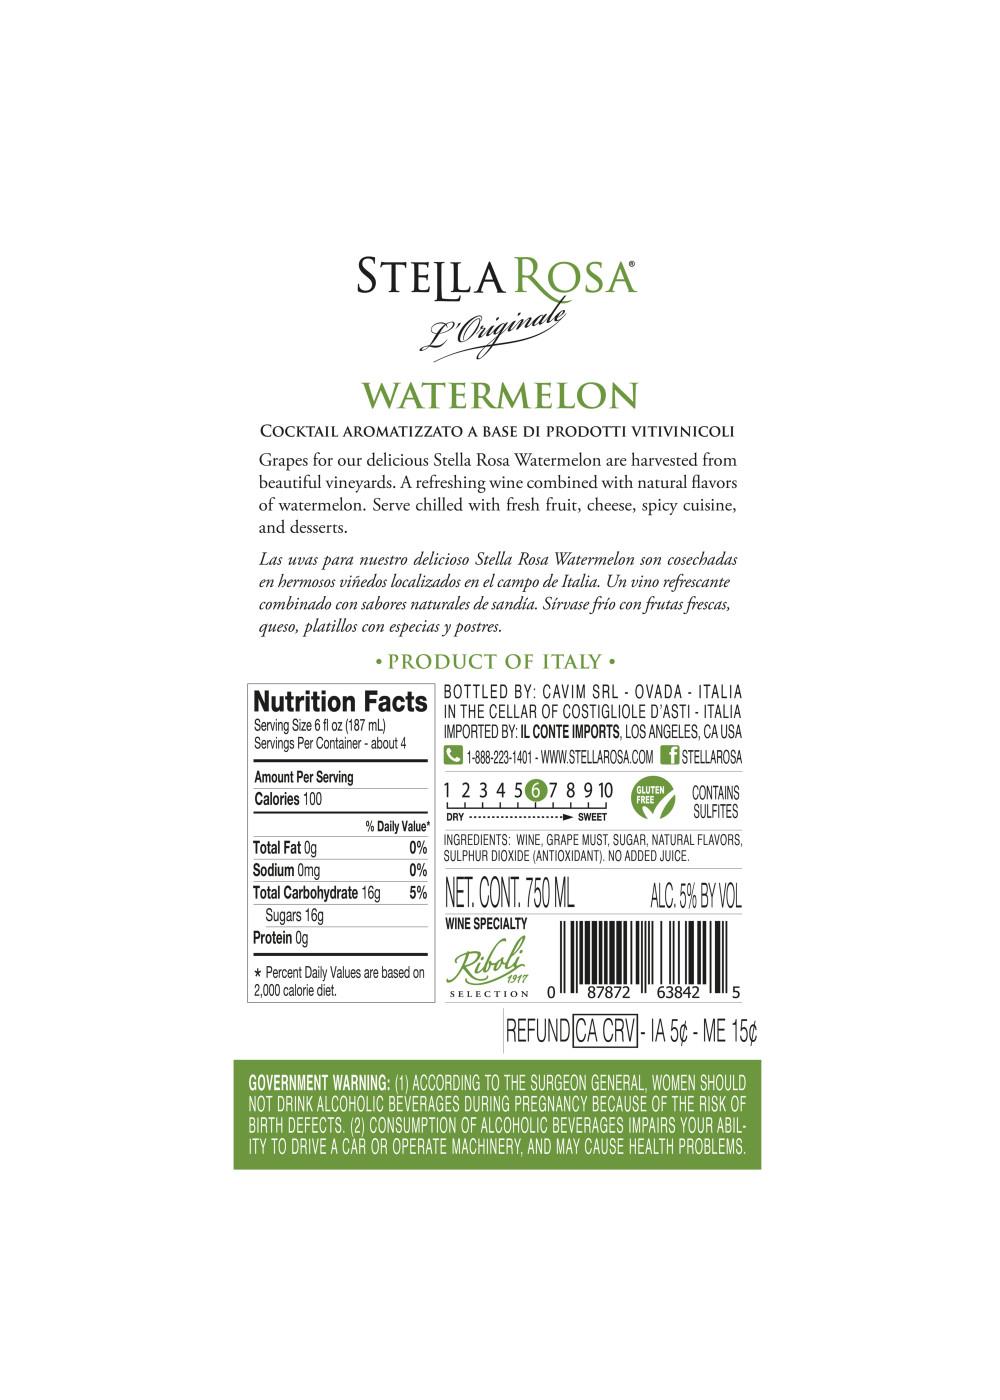 Stella Rosa Watermelon; image 3 of 7